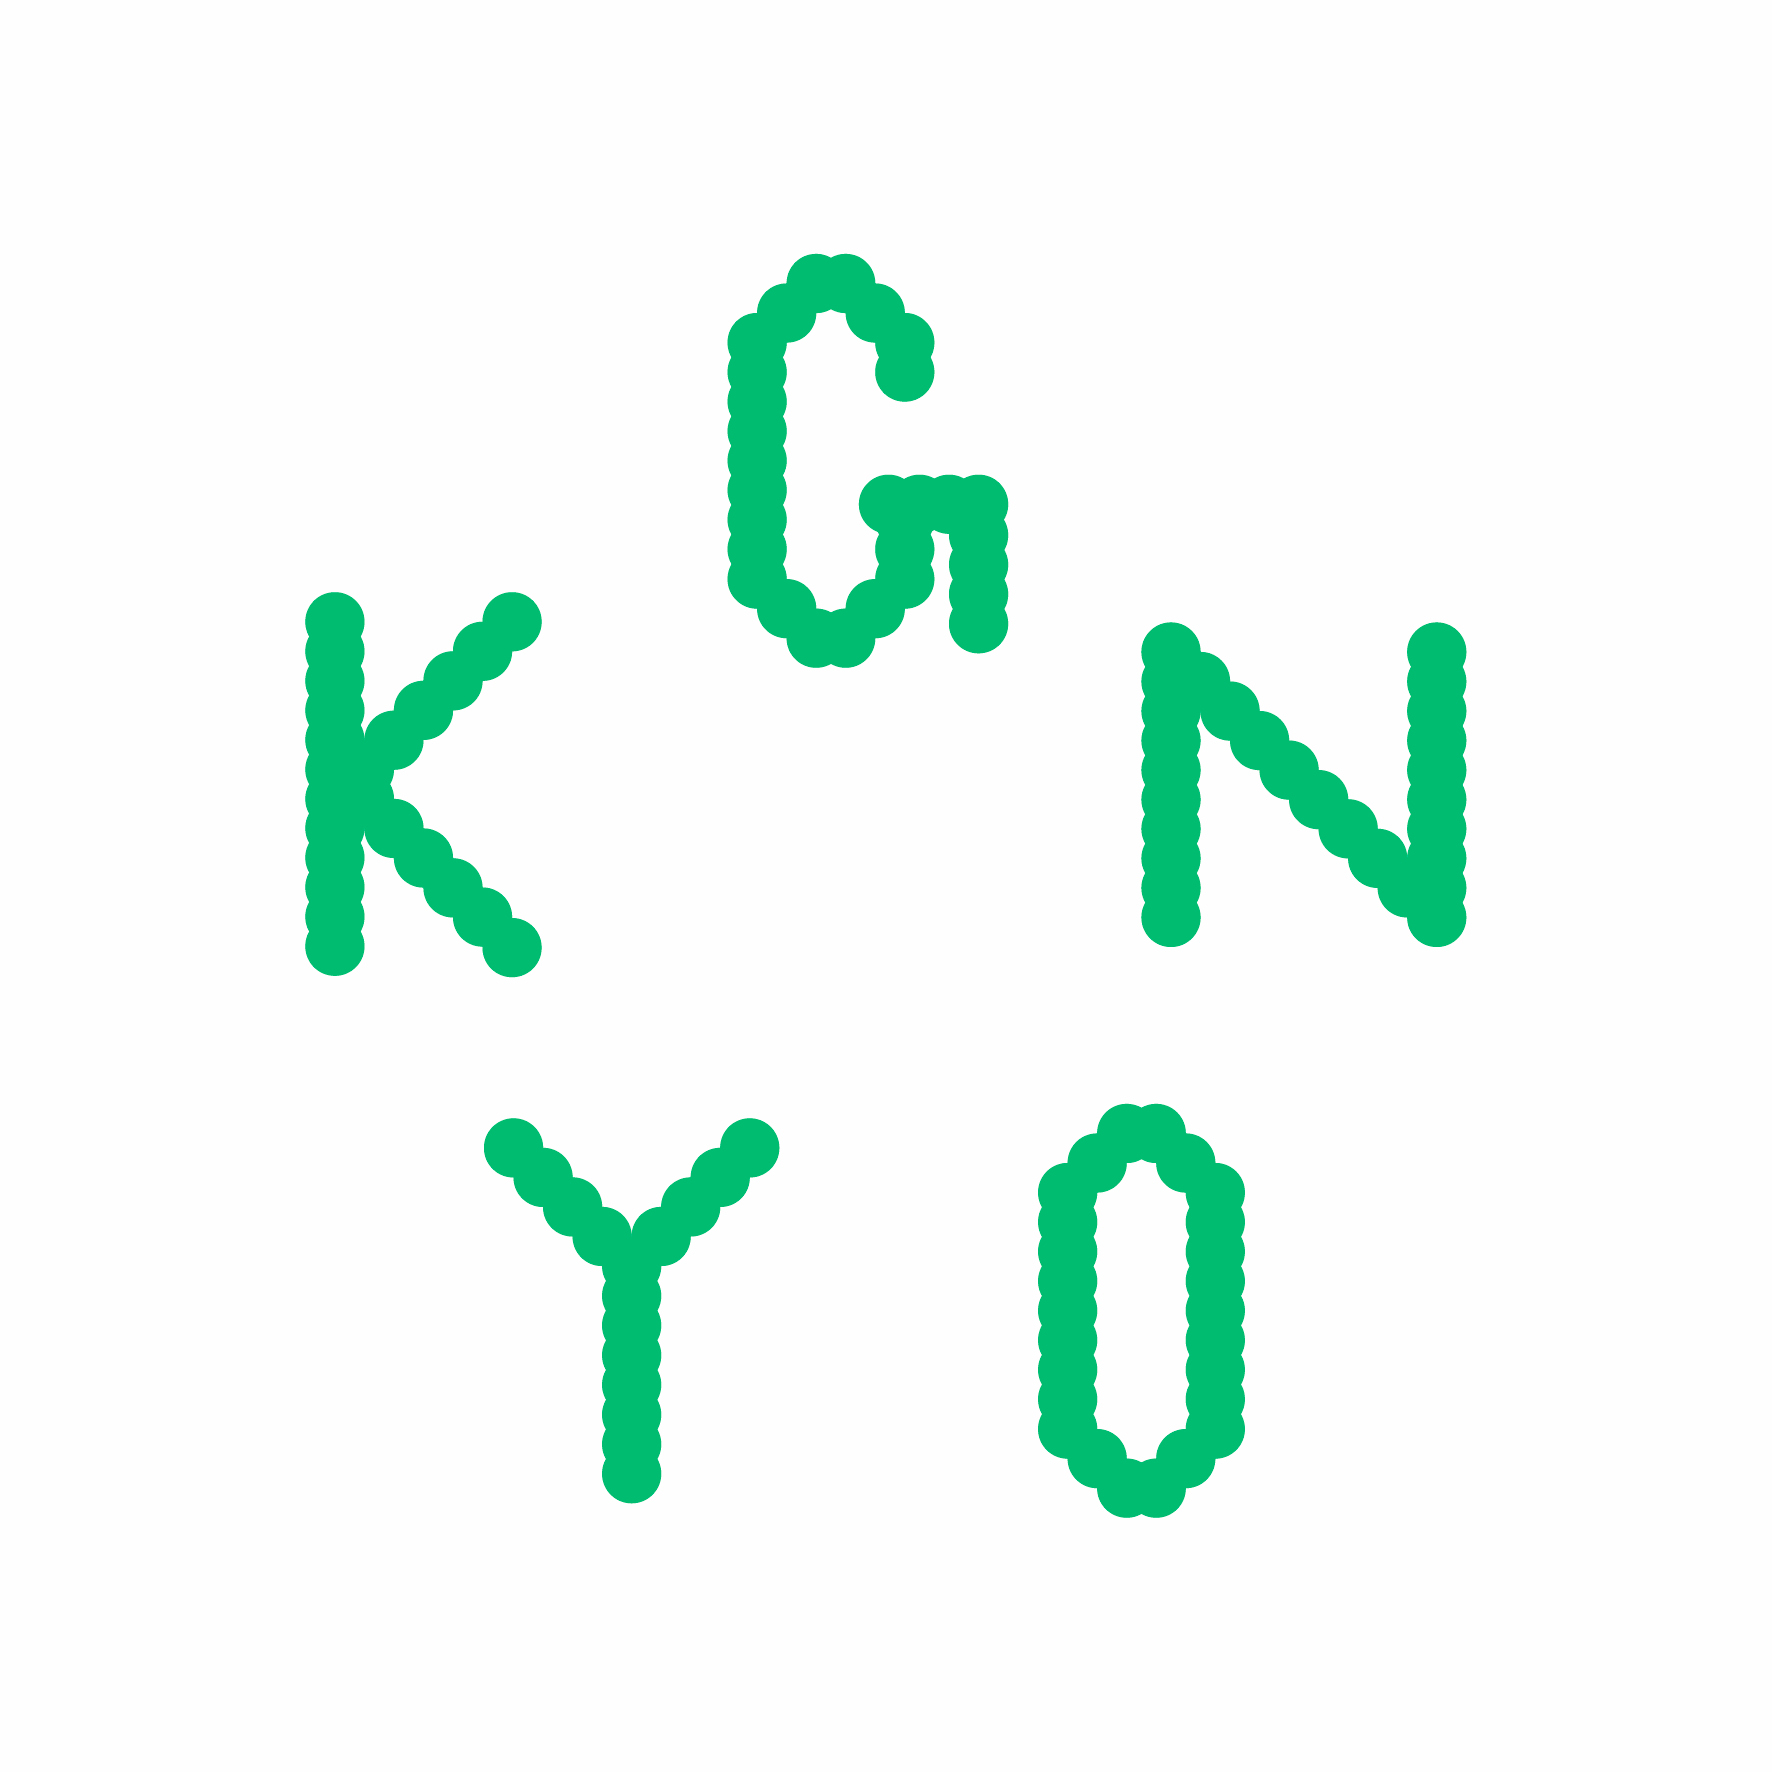 gnoyk-eunjoo-hong-and-hyungjae-kim-identity-design-kim-new-c.gif